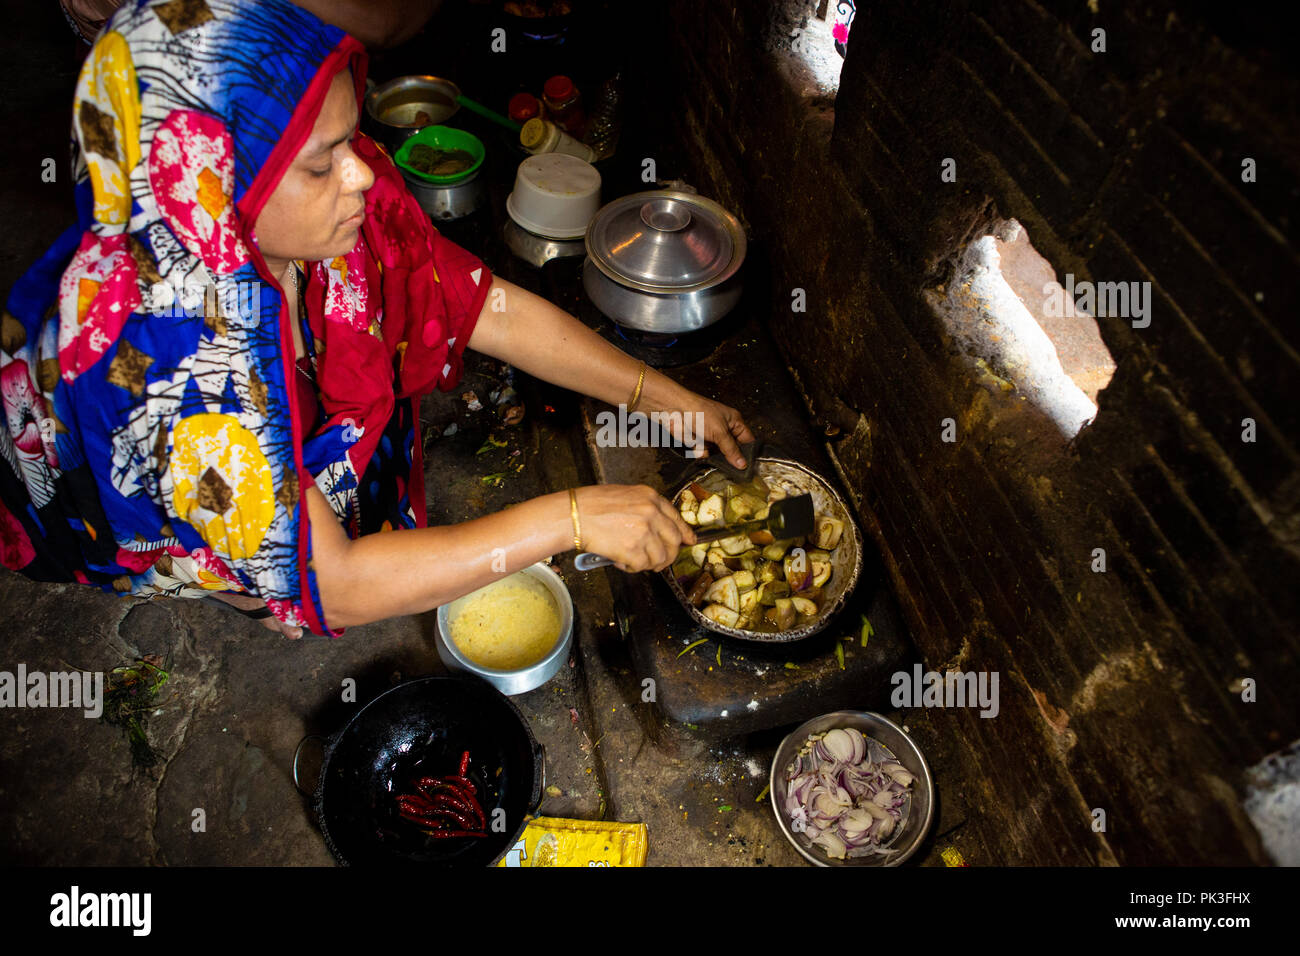 Slum Bangladesh High Resolution Stock Photography and Images - Alamy